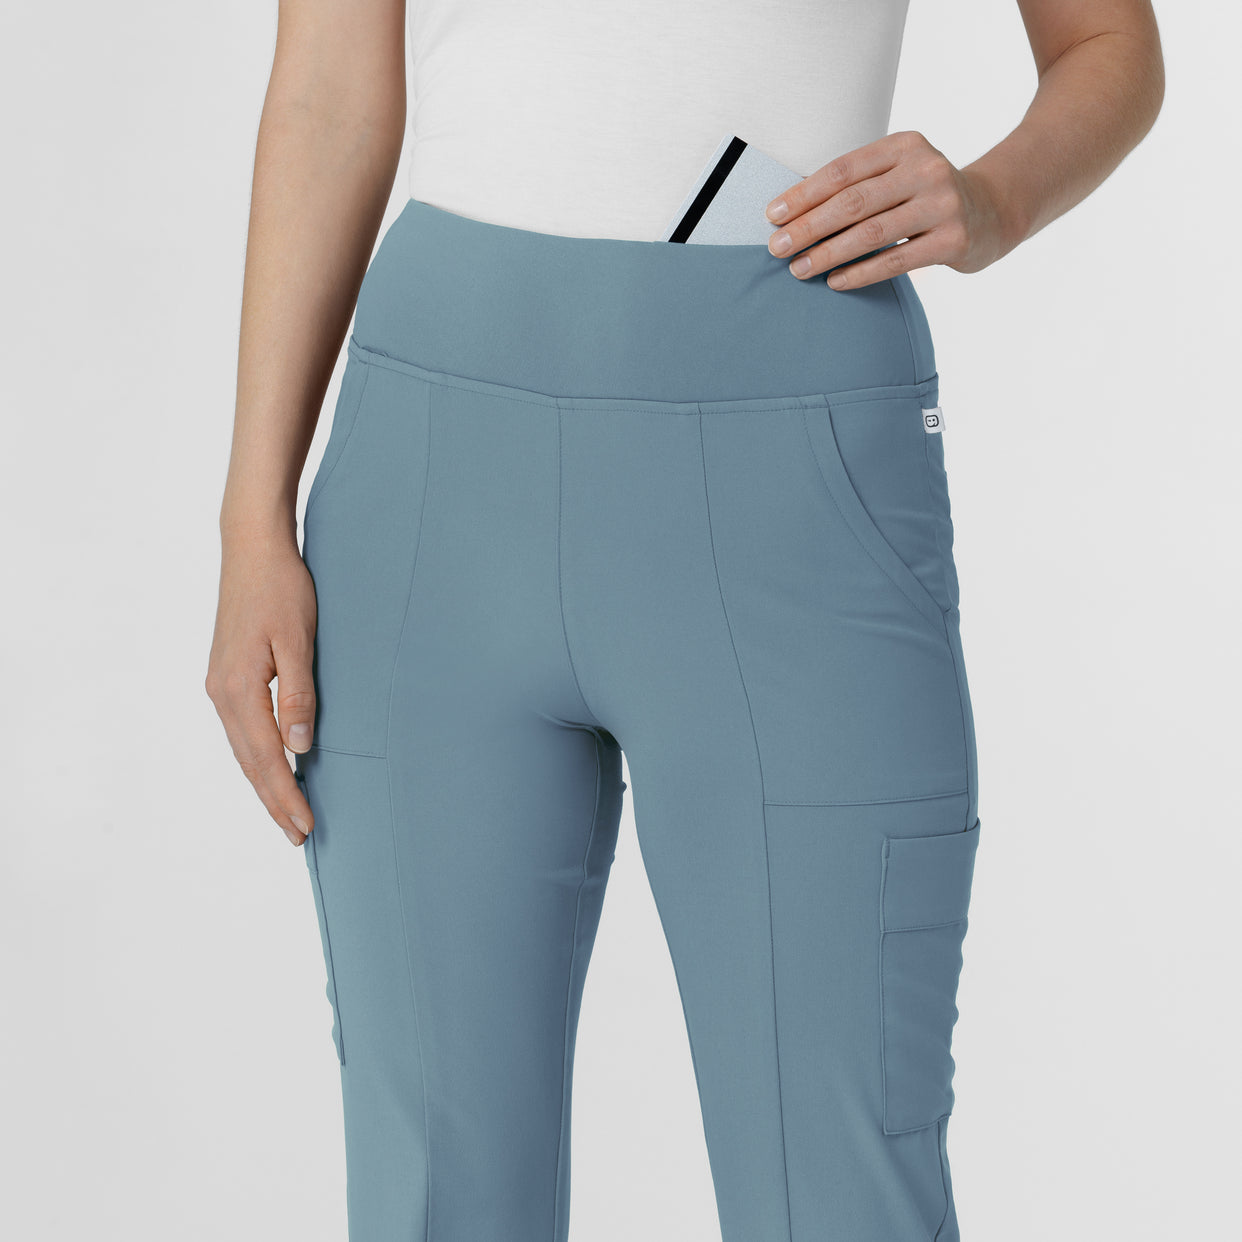 RENEW Women's Front Slit Flare Scrub Pant Elemental Blue side detail 1